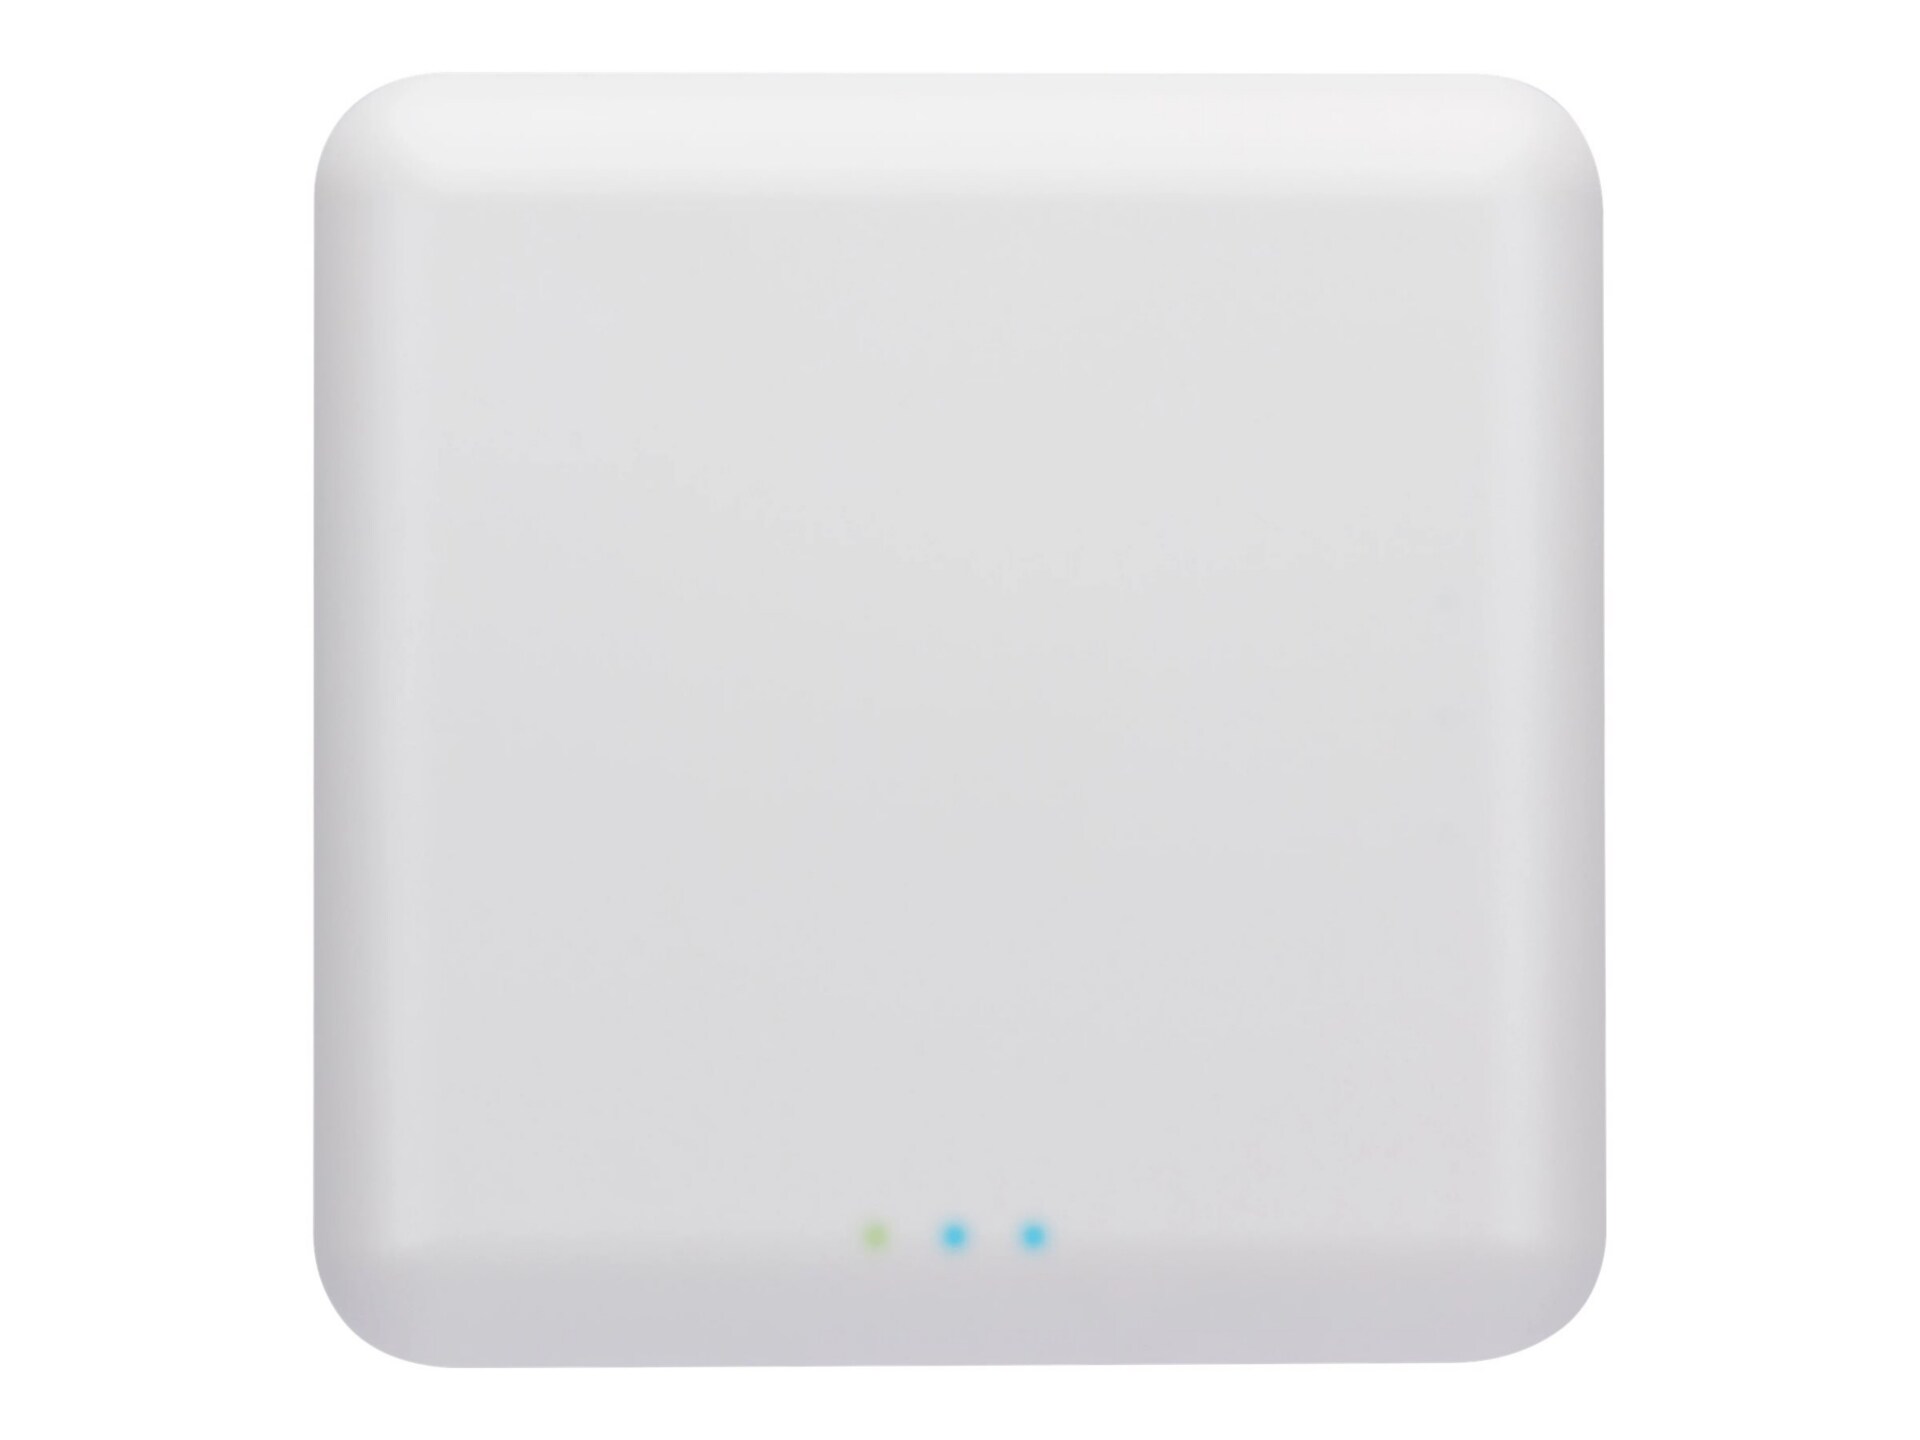 Luxul Apex Series XAP-810 - wireless access point - Wi-Fi 5, Wi-Fi 5